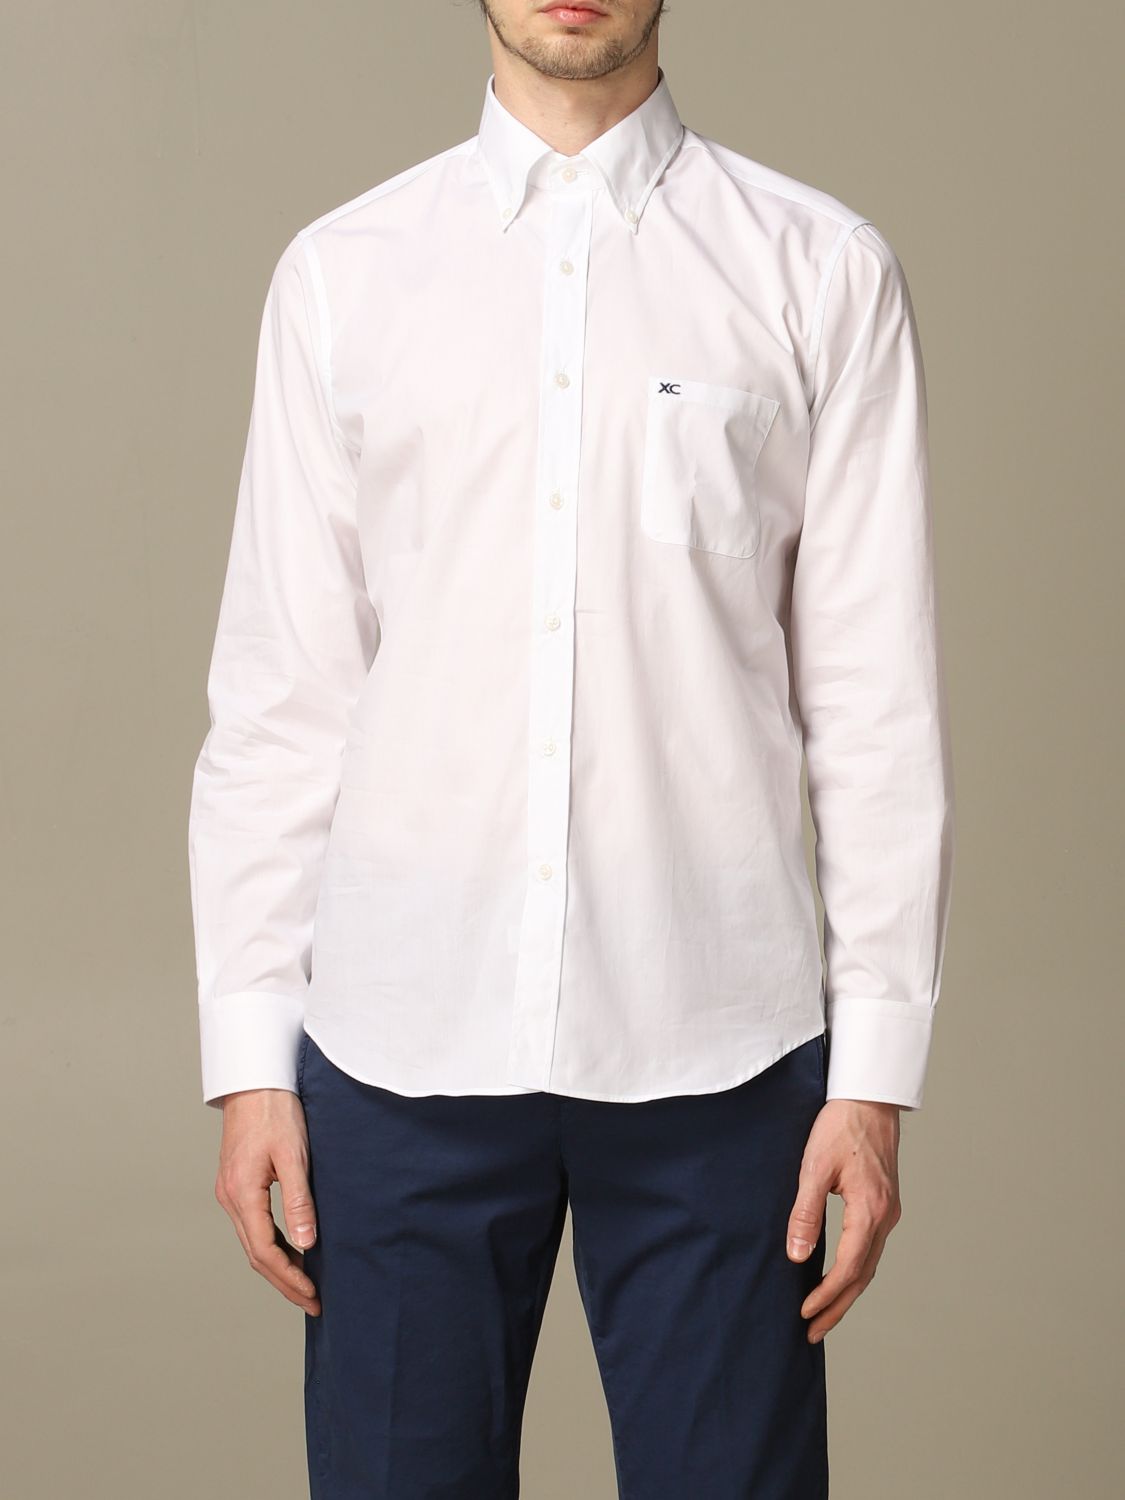 Shirt Xc: Xc shirt for men white 1